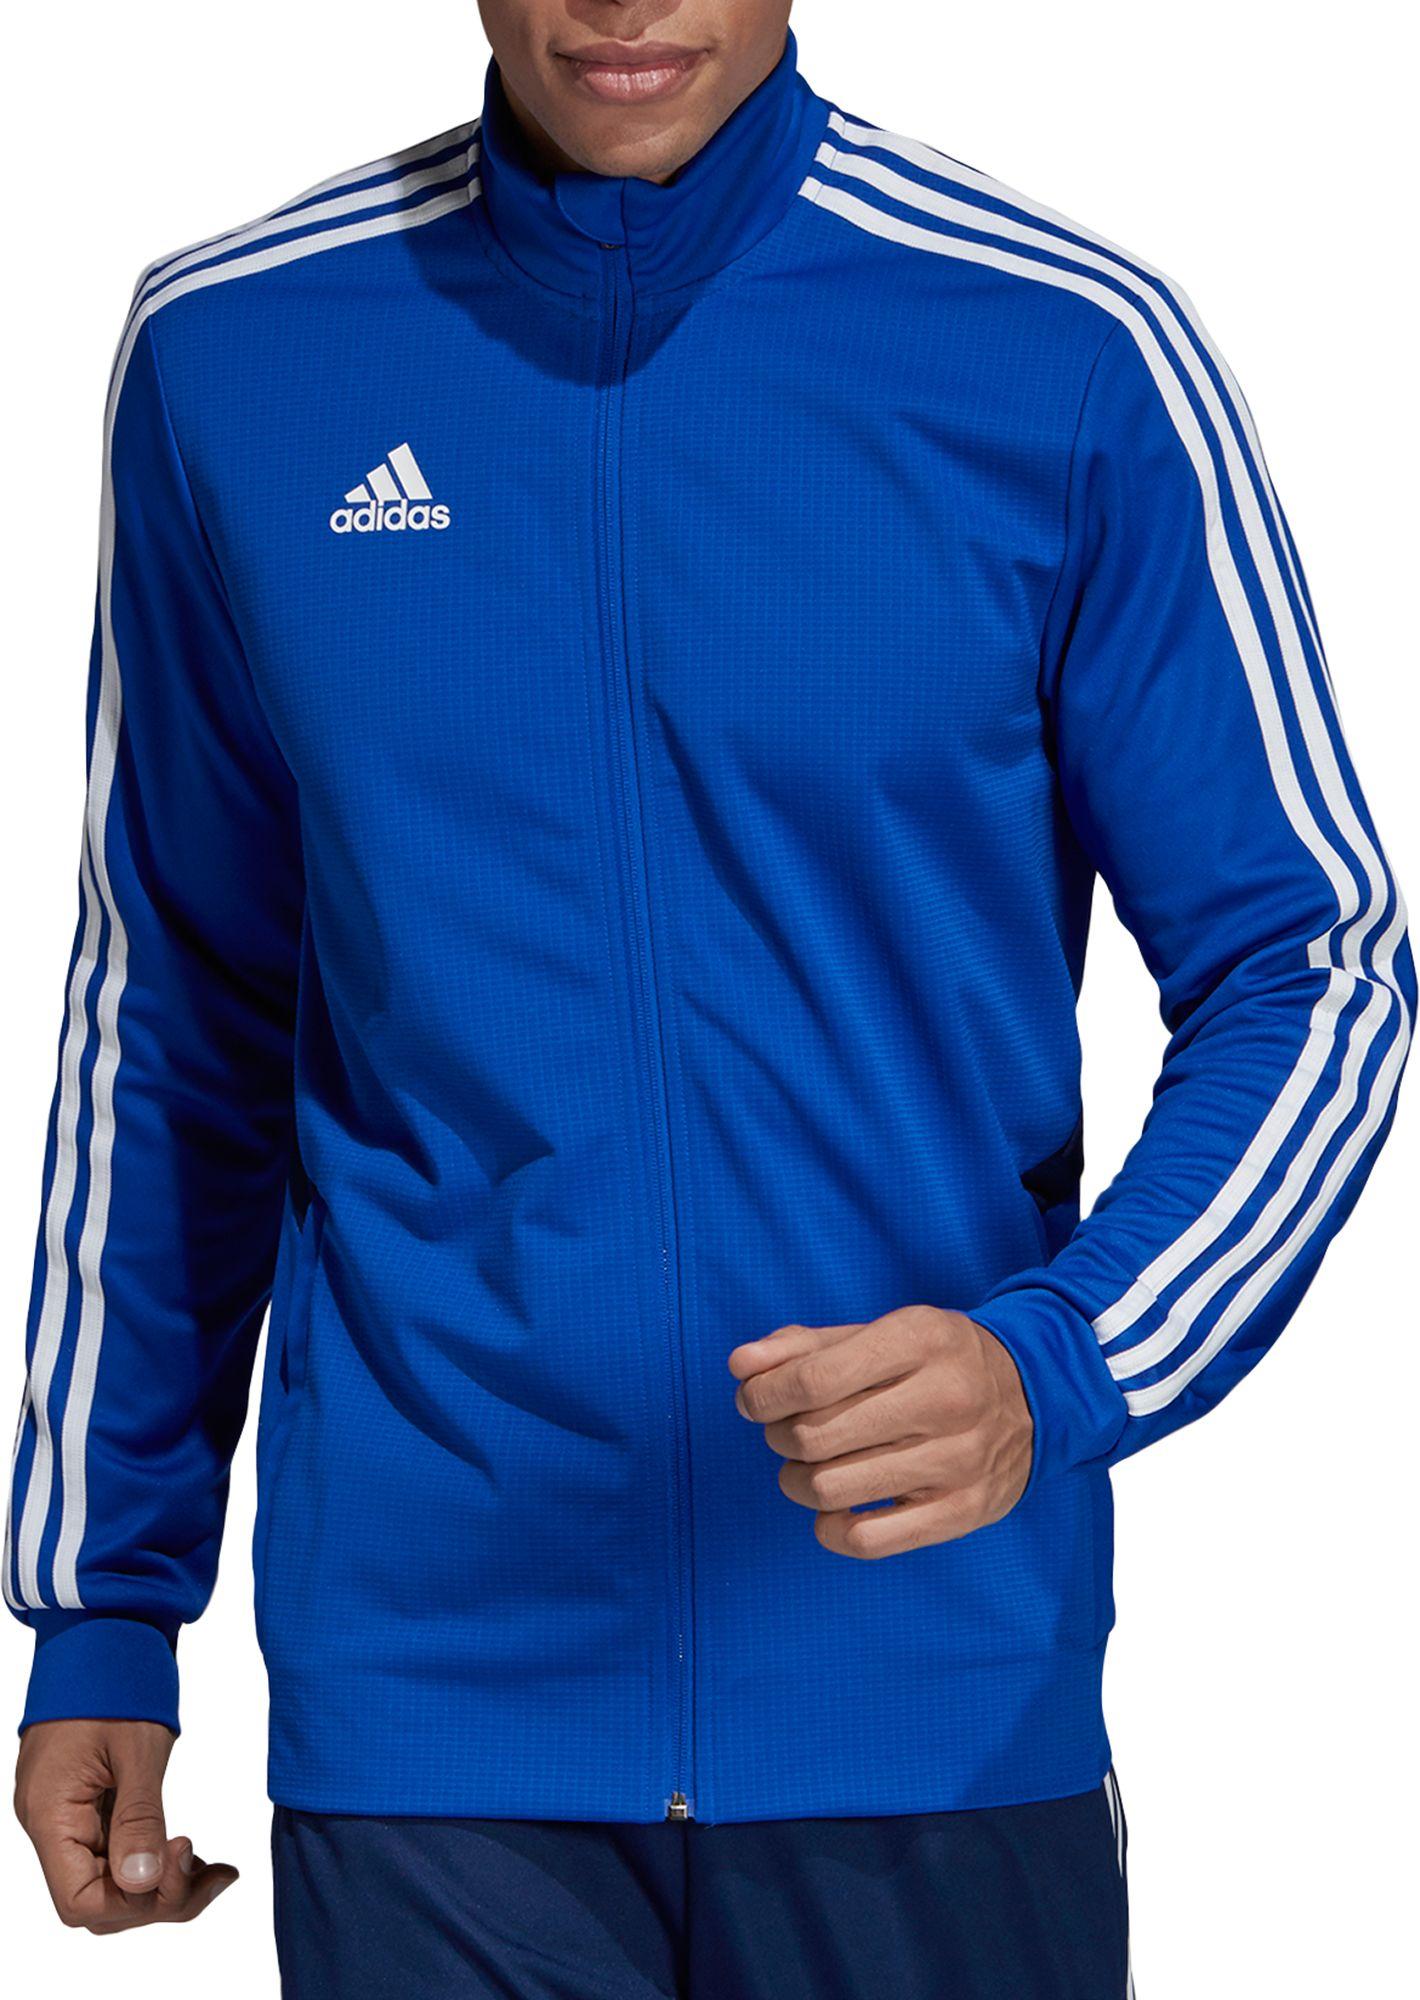 adidas Tiro 19 Training Jacket in Blue for Men - Lyst